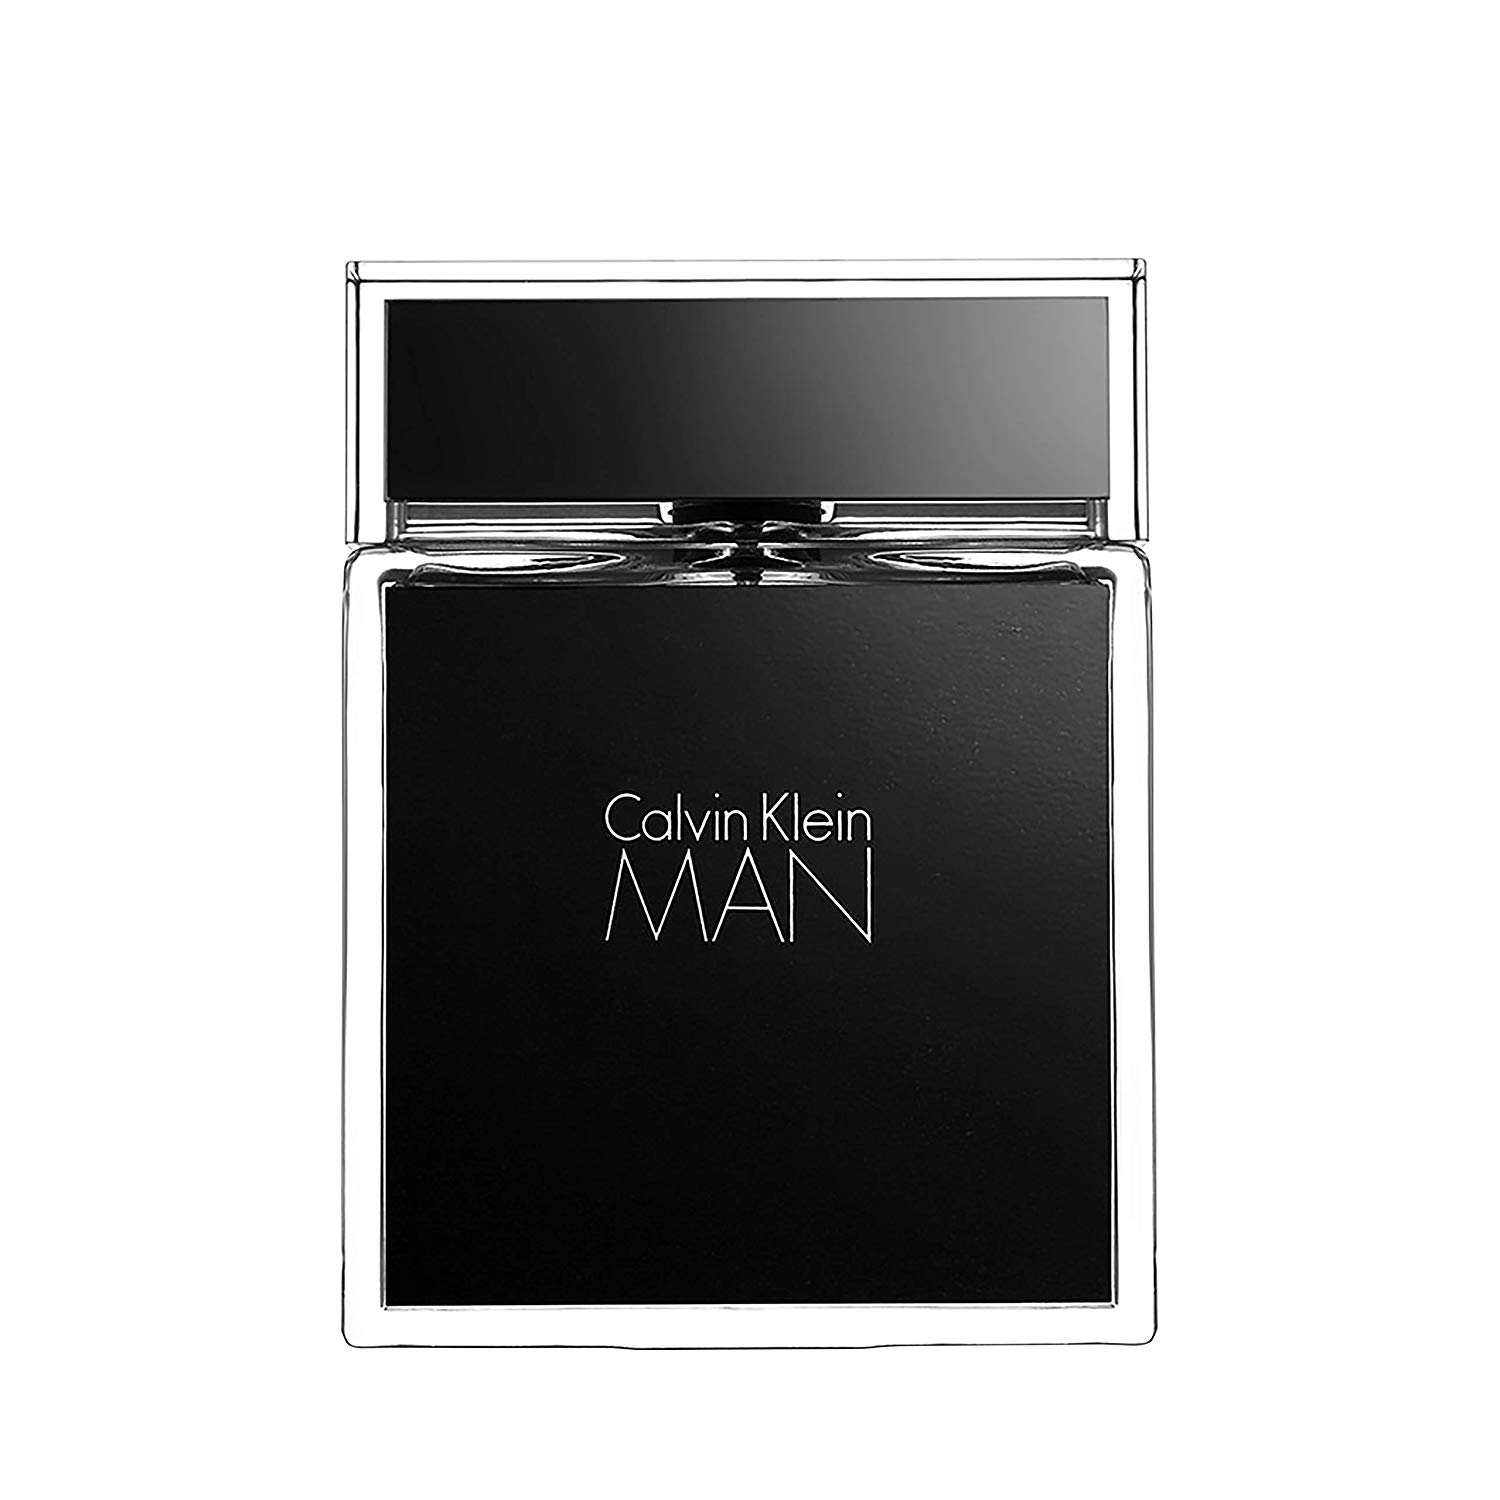 Calvin Klein CK Man Eau de Toilette 100ml Spray